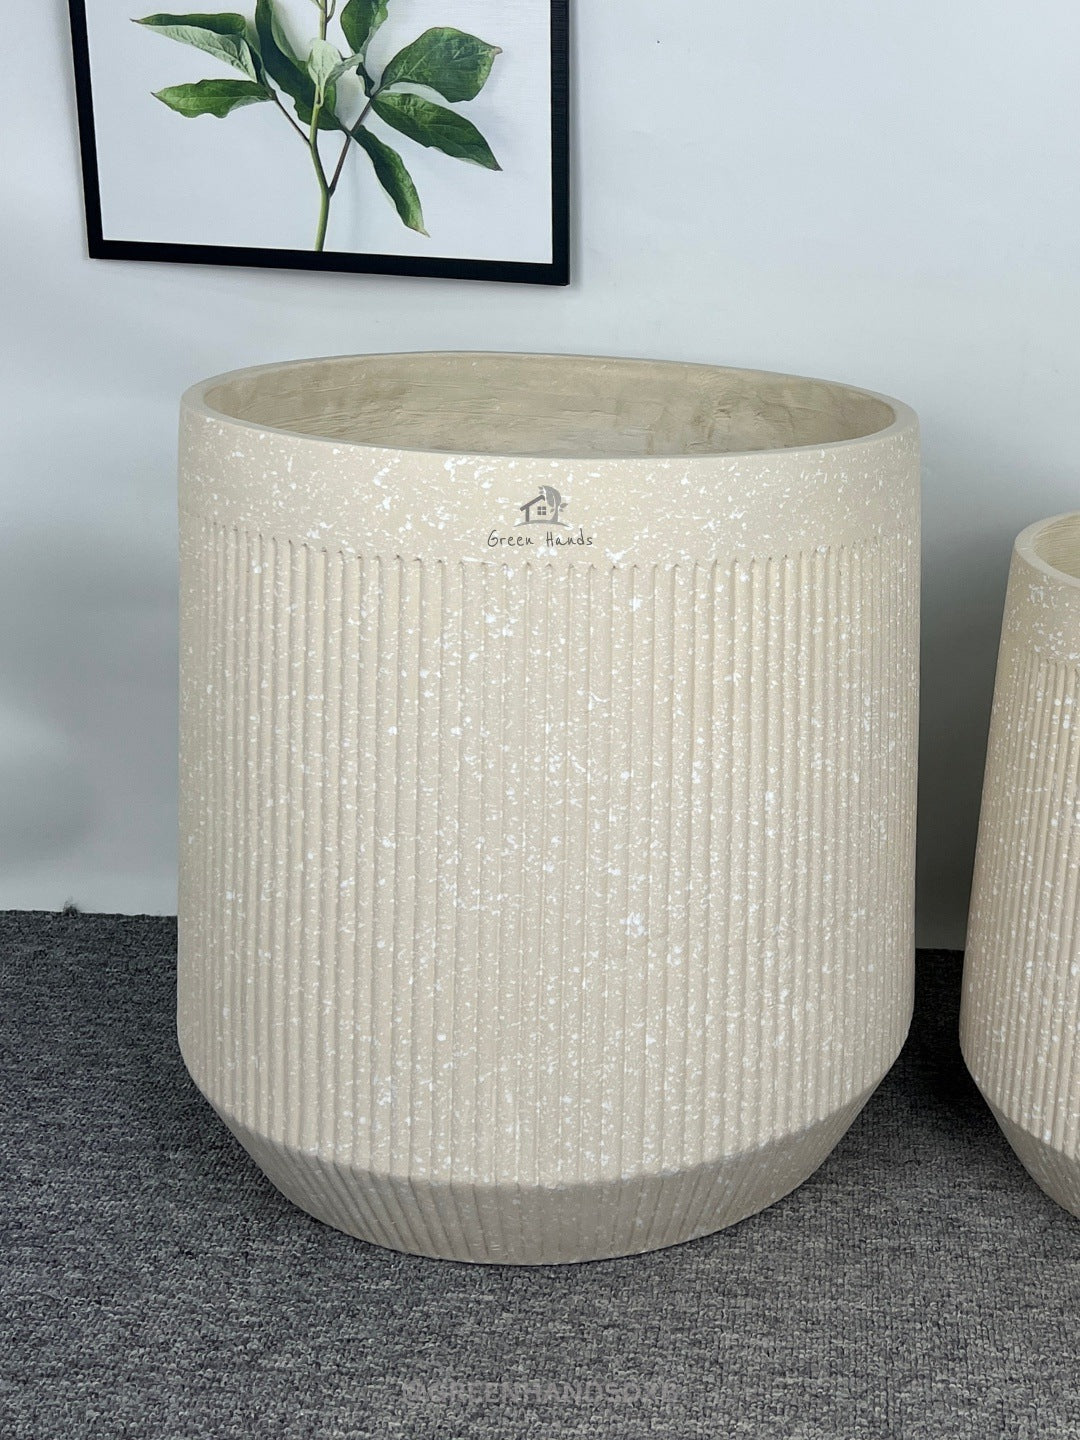 Arabian Sand Fiber Pots | Lightweight & Elegant | Perfect for Home Decor